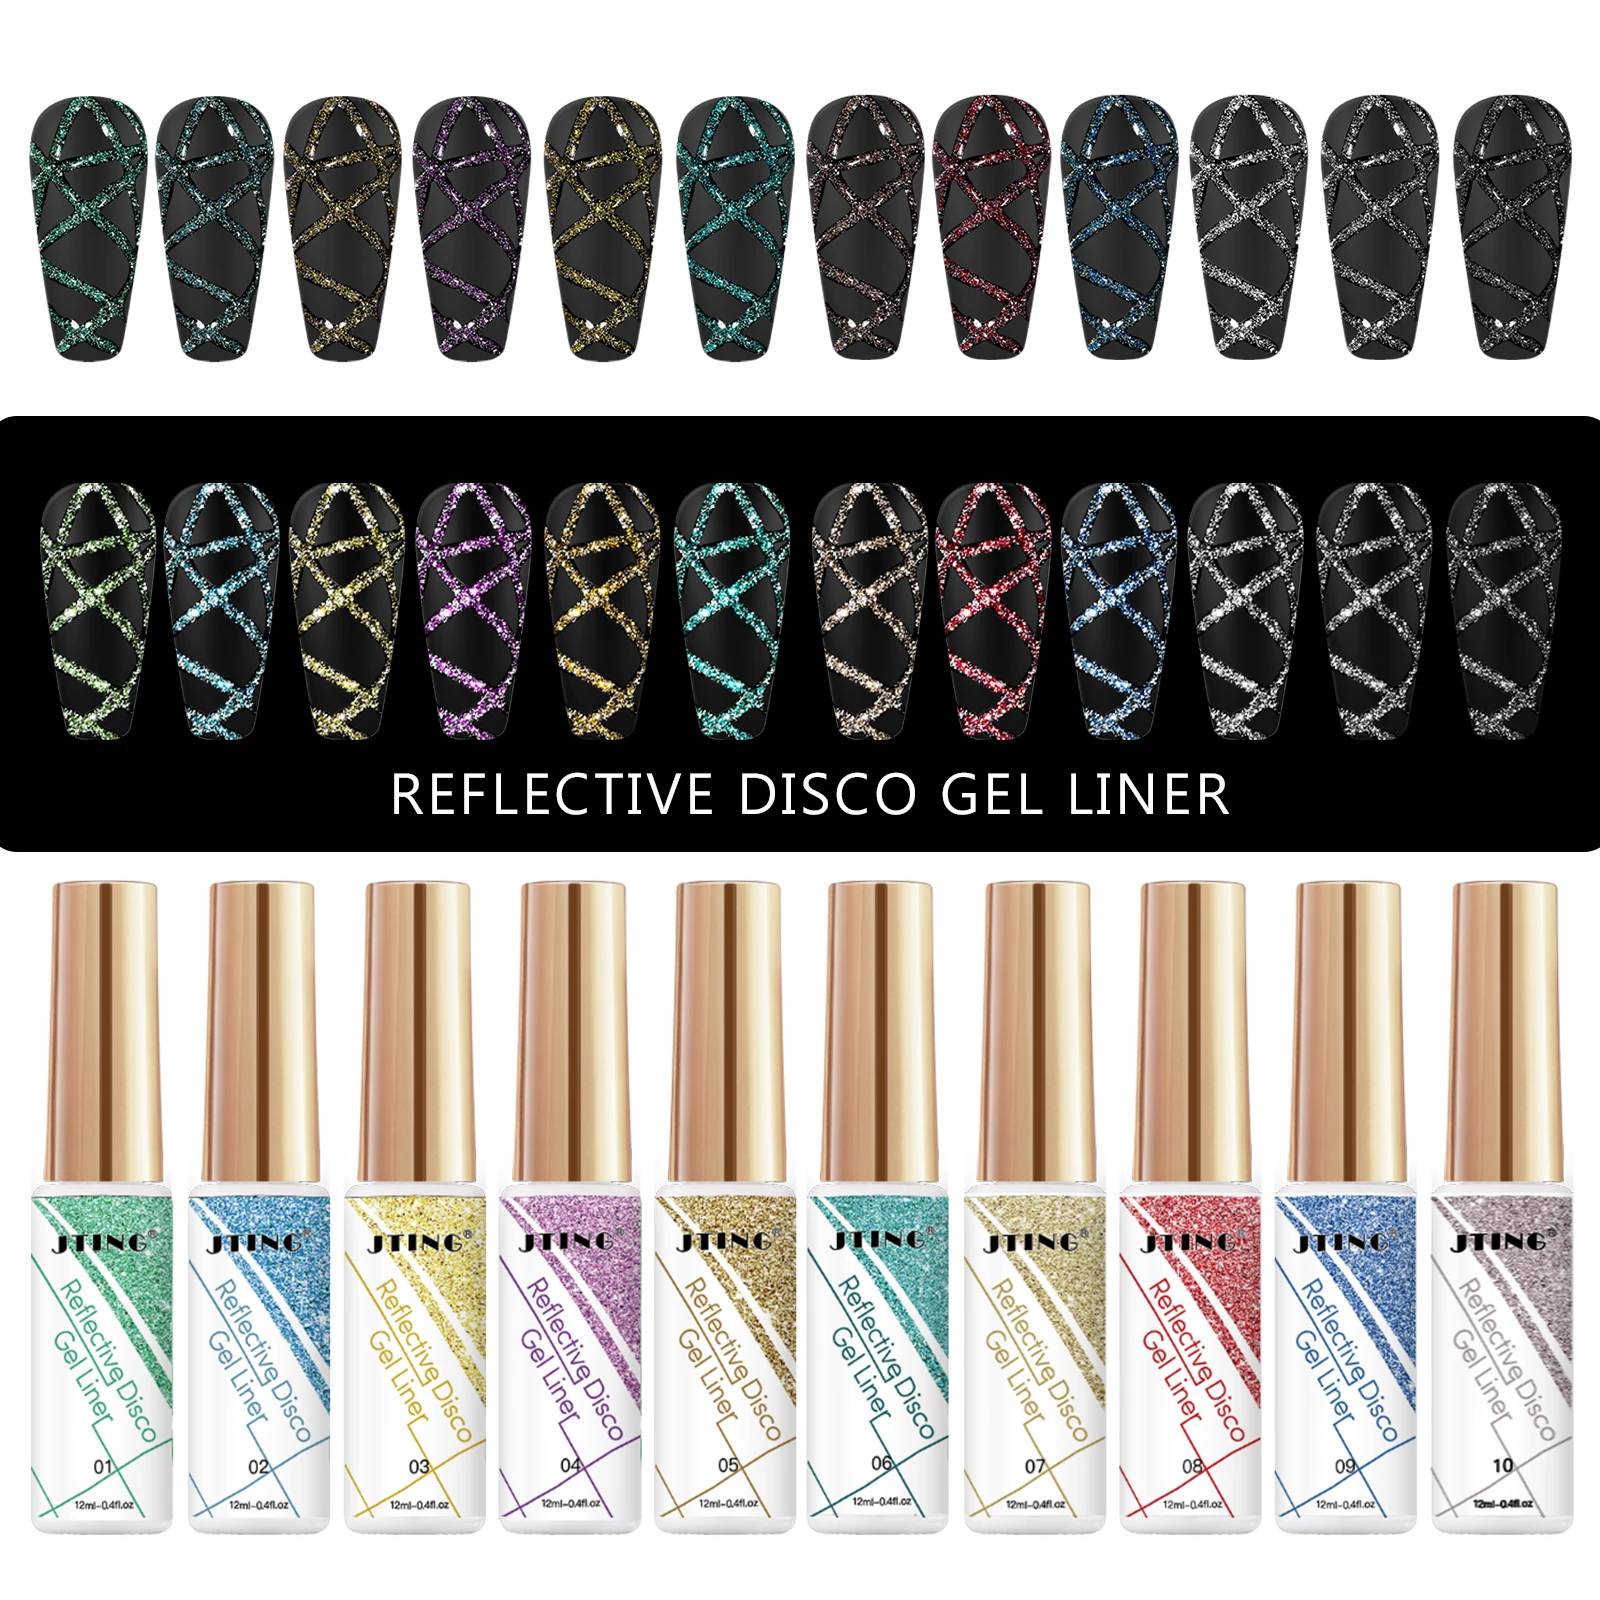 

JTING New popular nail art 12Colors Reflective disco liner gel polish set gel liner private label OEM 12ml customized